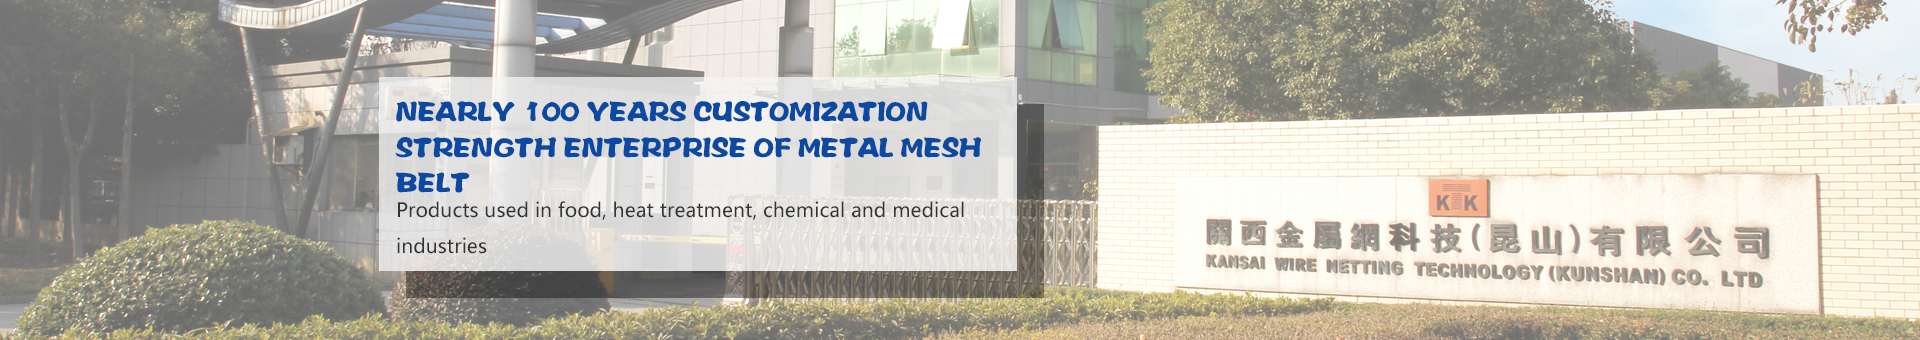 Kansai metal mesh technology